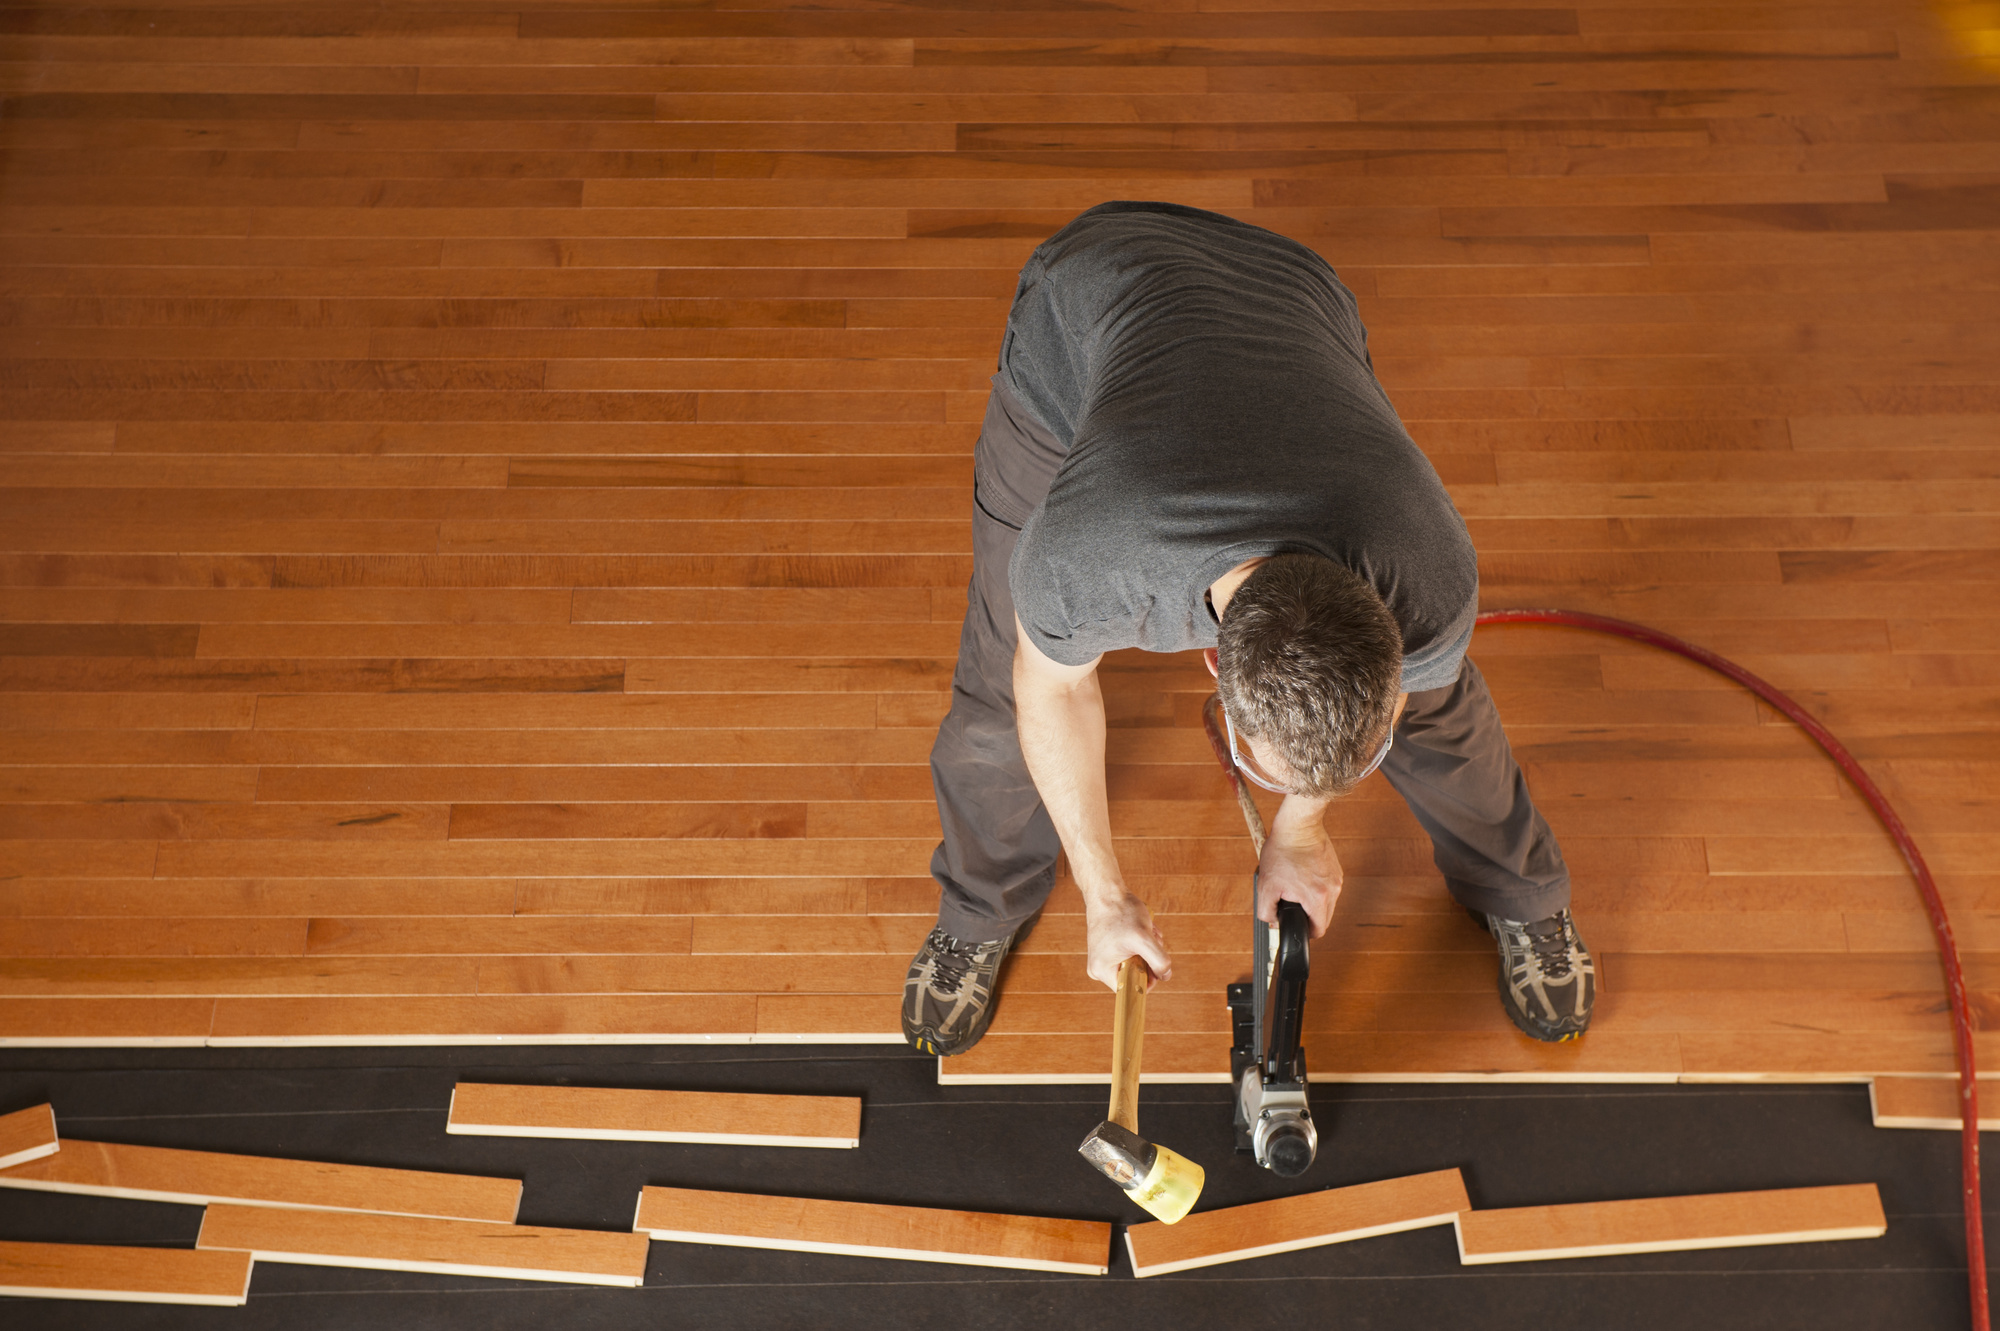 Hardwood Flooring Cost To Install, Average Cost To Install Floating Hardwood Floor